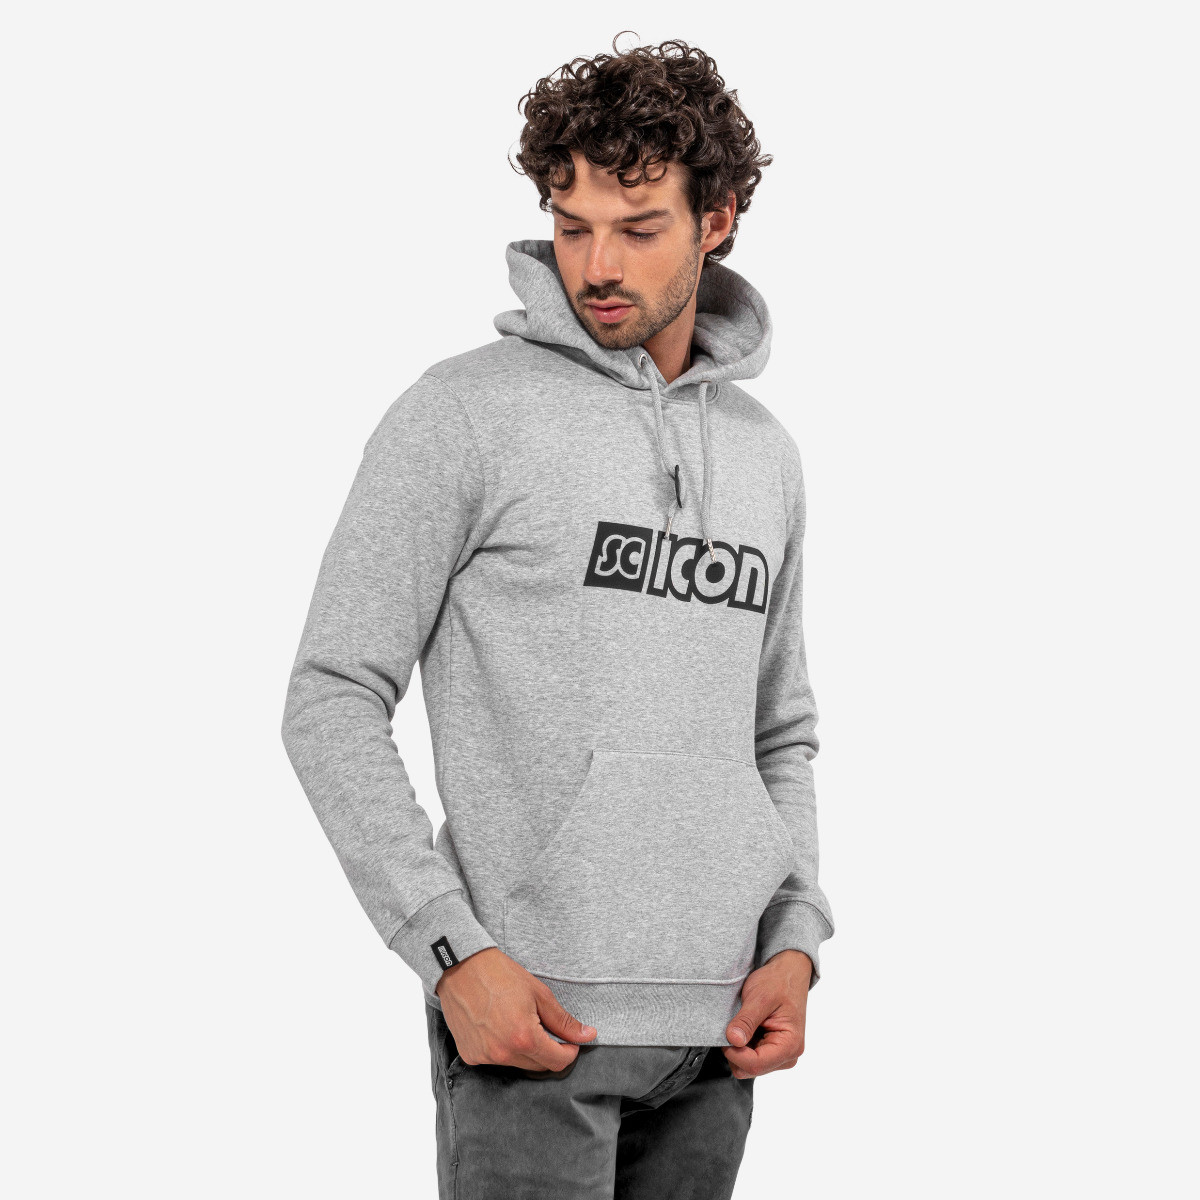 Scicon Sports | Scicon Pullover Cotton Hoodie - Grey - HS60704